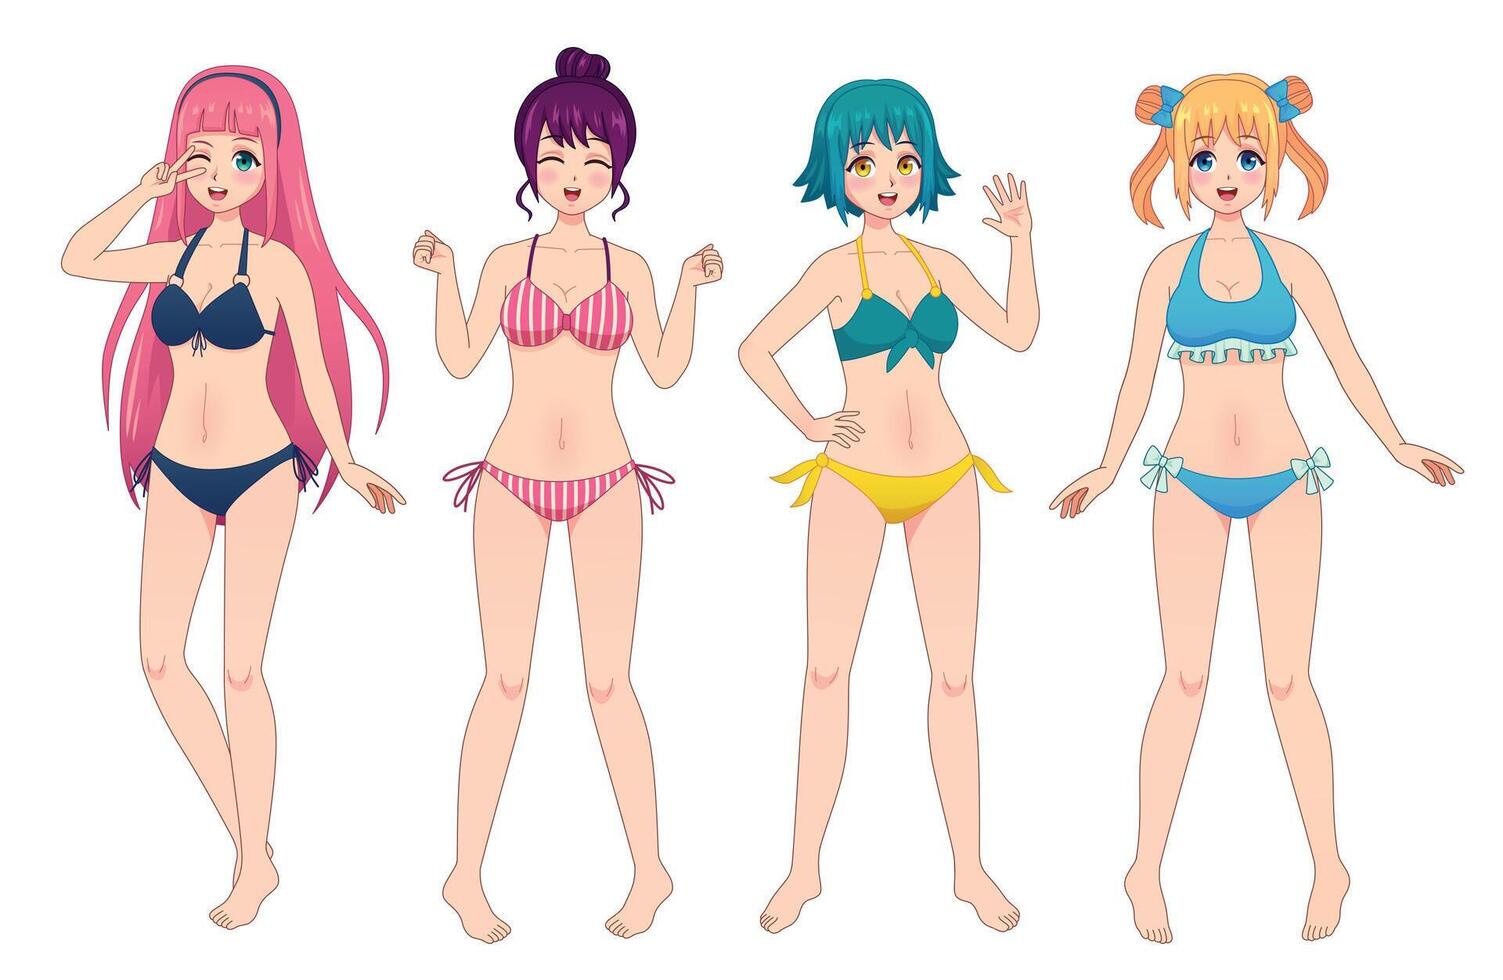 anime manga muchachas en bikini. grupo de kawaii hembra japonés cómic caracteres en trajes de baño playa mujer guiños, ondulación y sonrisas vector conjunto